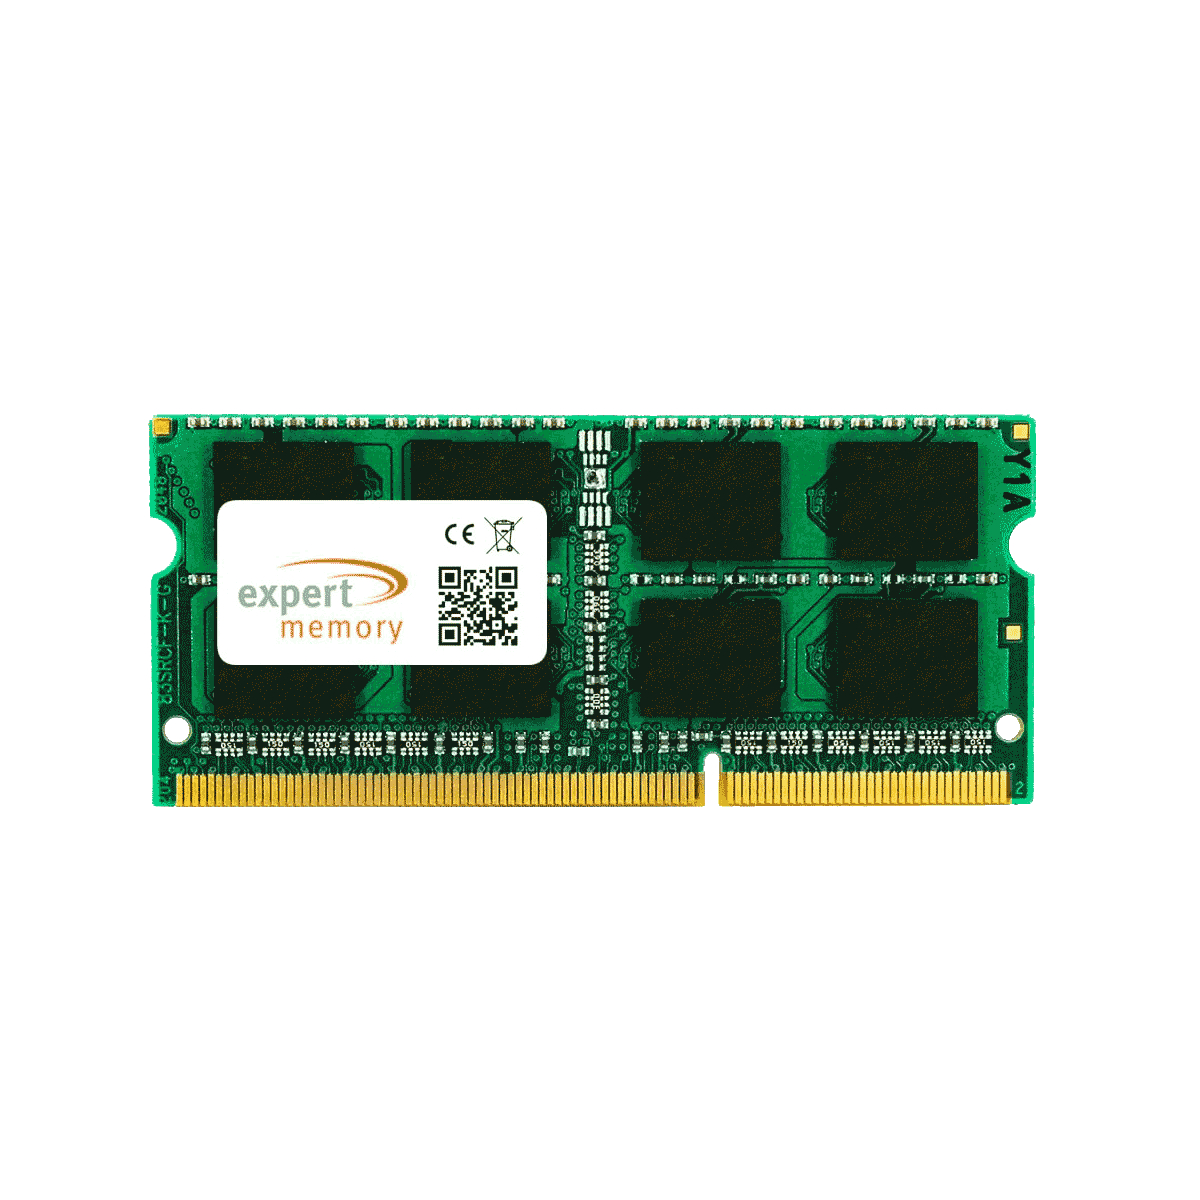 EXPERT MEMORY 4GB Acer GB Laptop P253 TravelMate DDR3 RAM Memory Upgrade 4